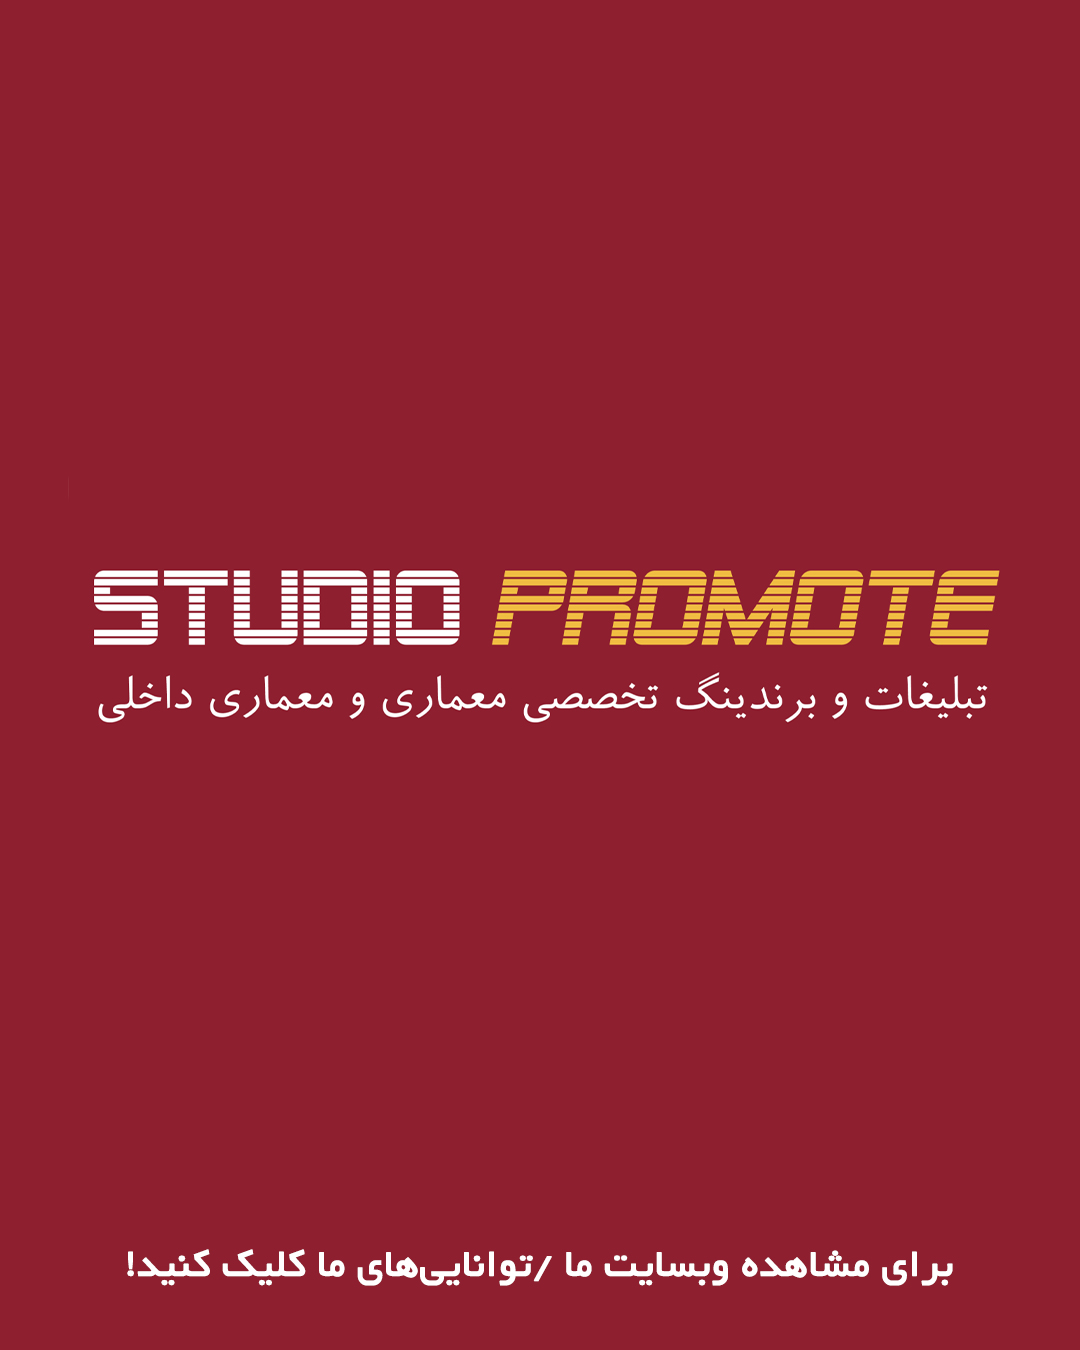 http://studiopromote.com/